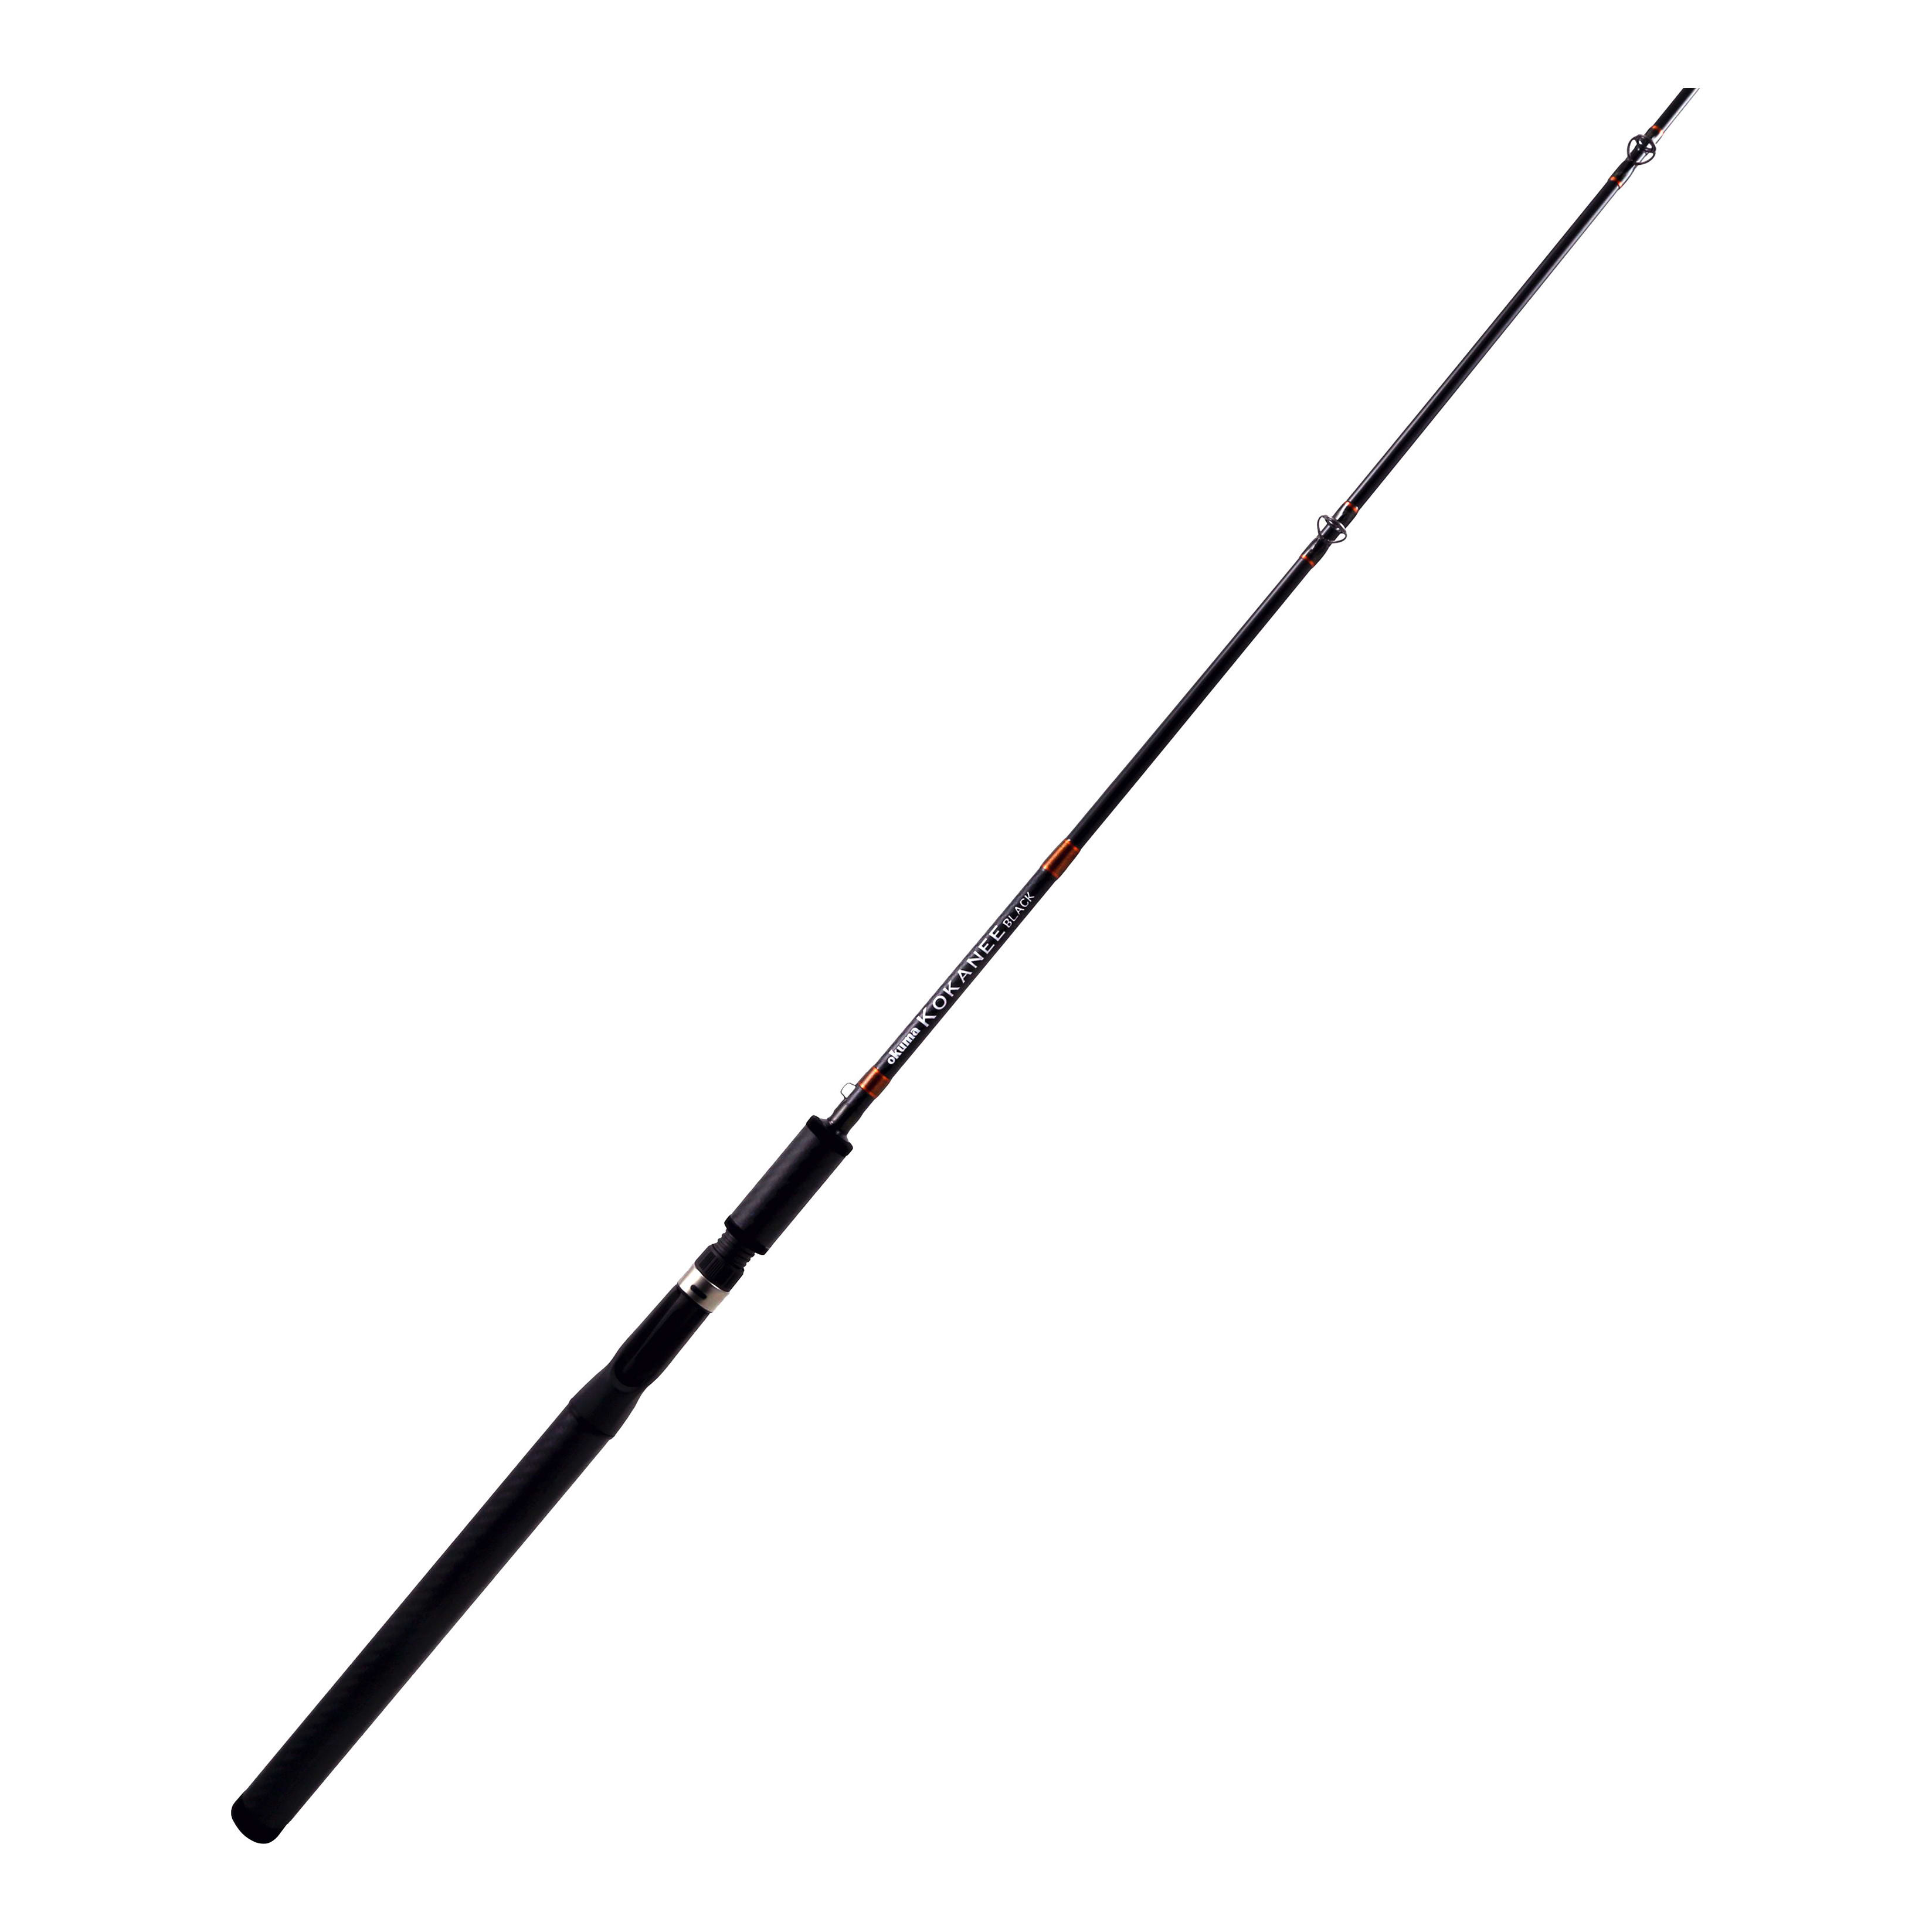 Okuma Kokanee Black 2-Piece Casting Rod - handle